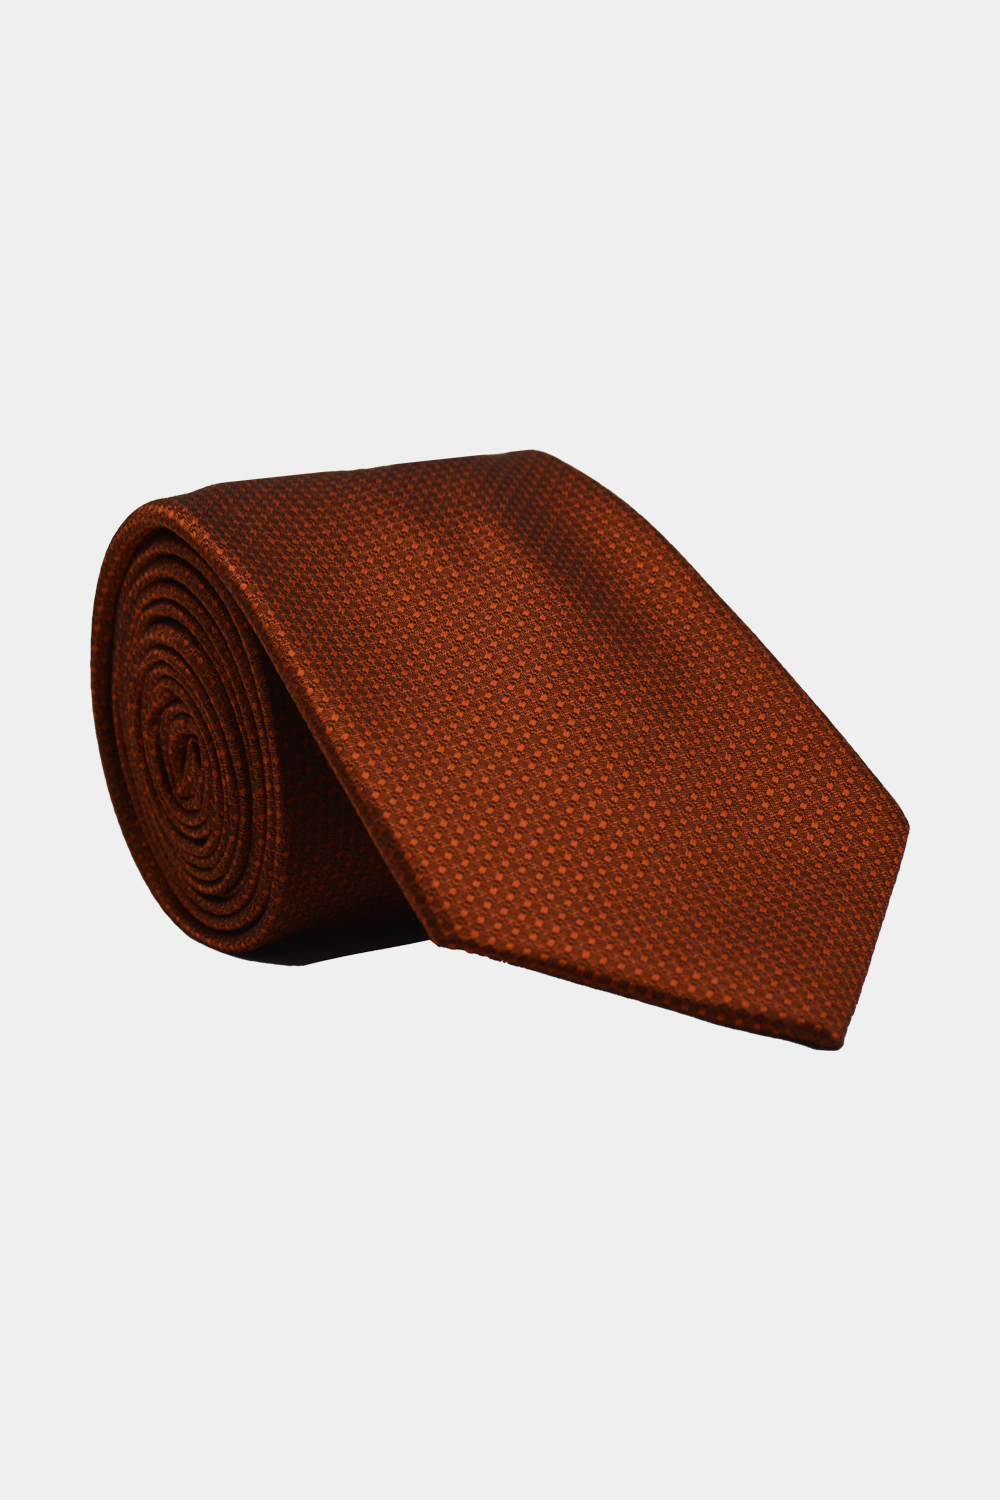 Jacquard Tie 7.5 cm Orange - TIE HOUSE